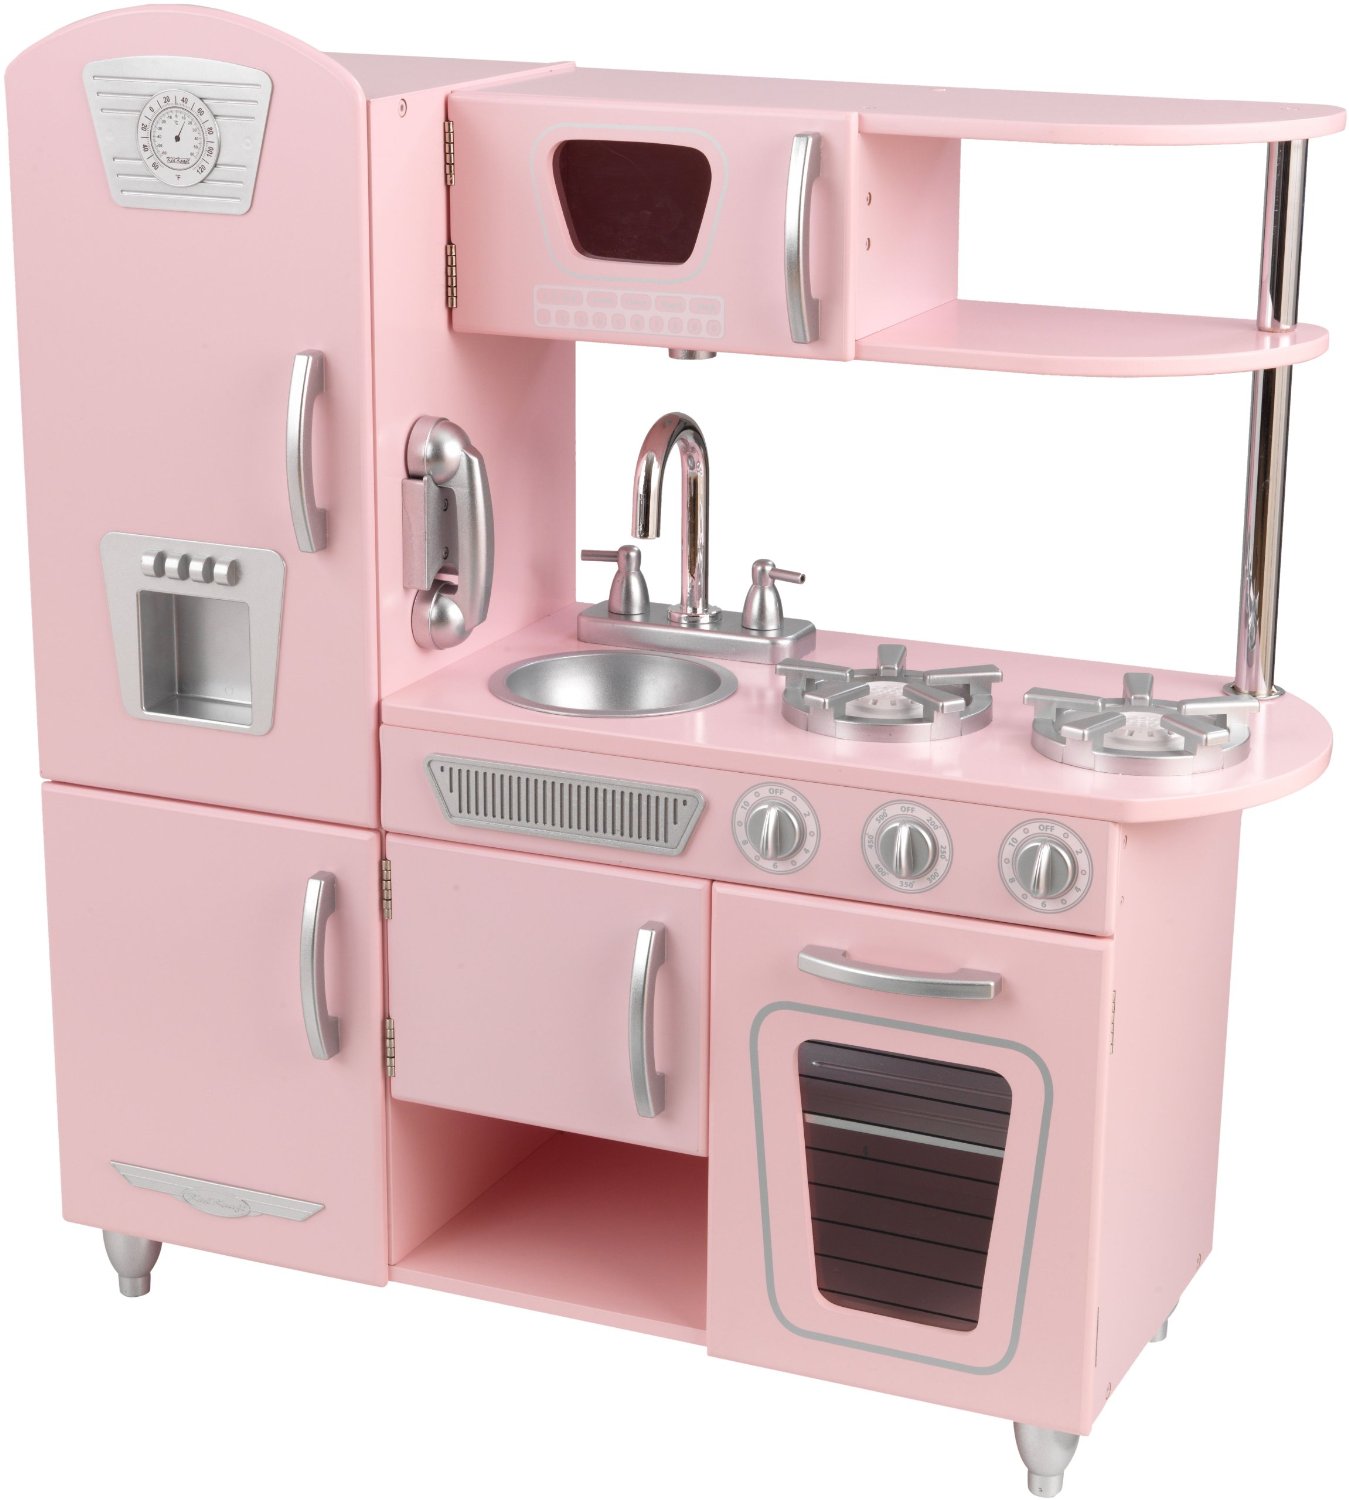 Kidkraft Vintage Kitchen In Pink Or Red 8662 Wheel N Deal Mama